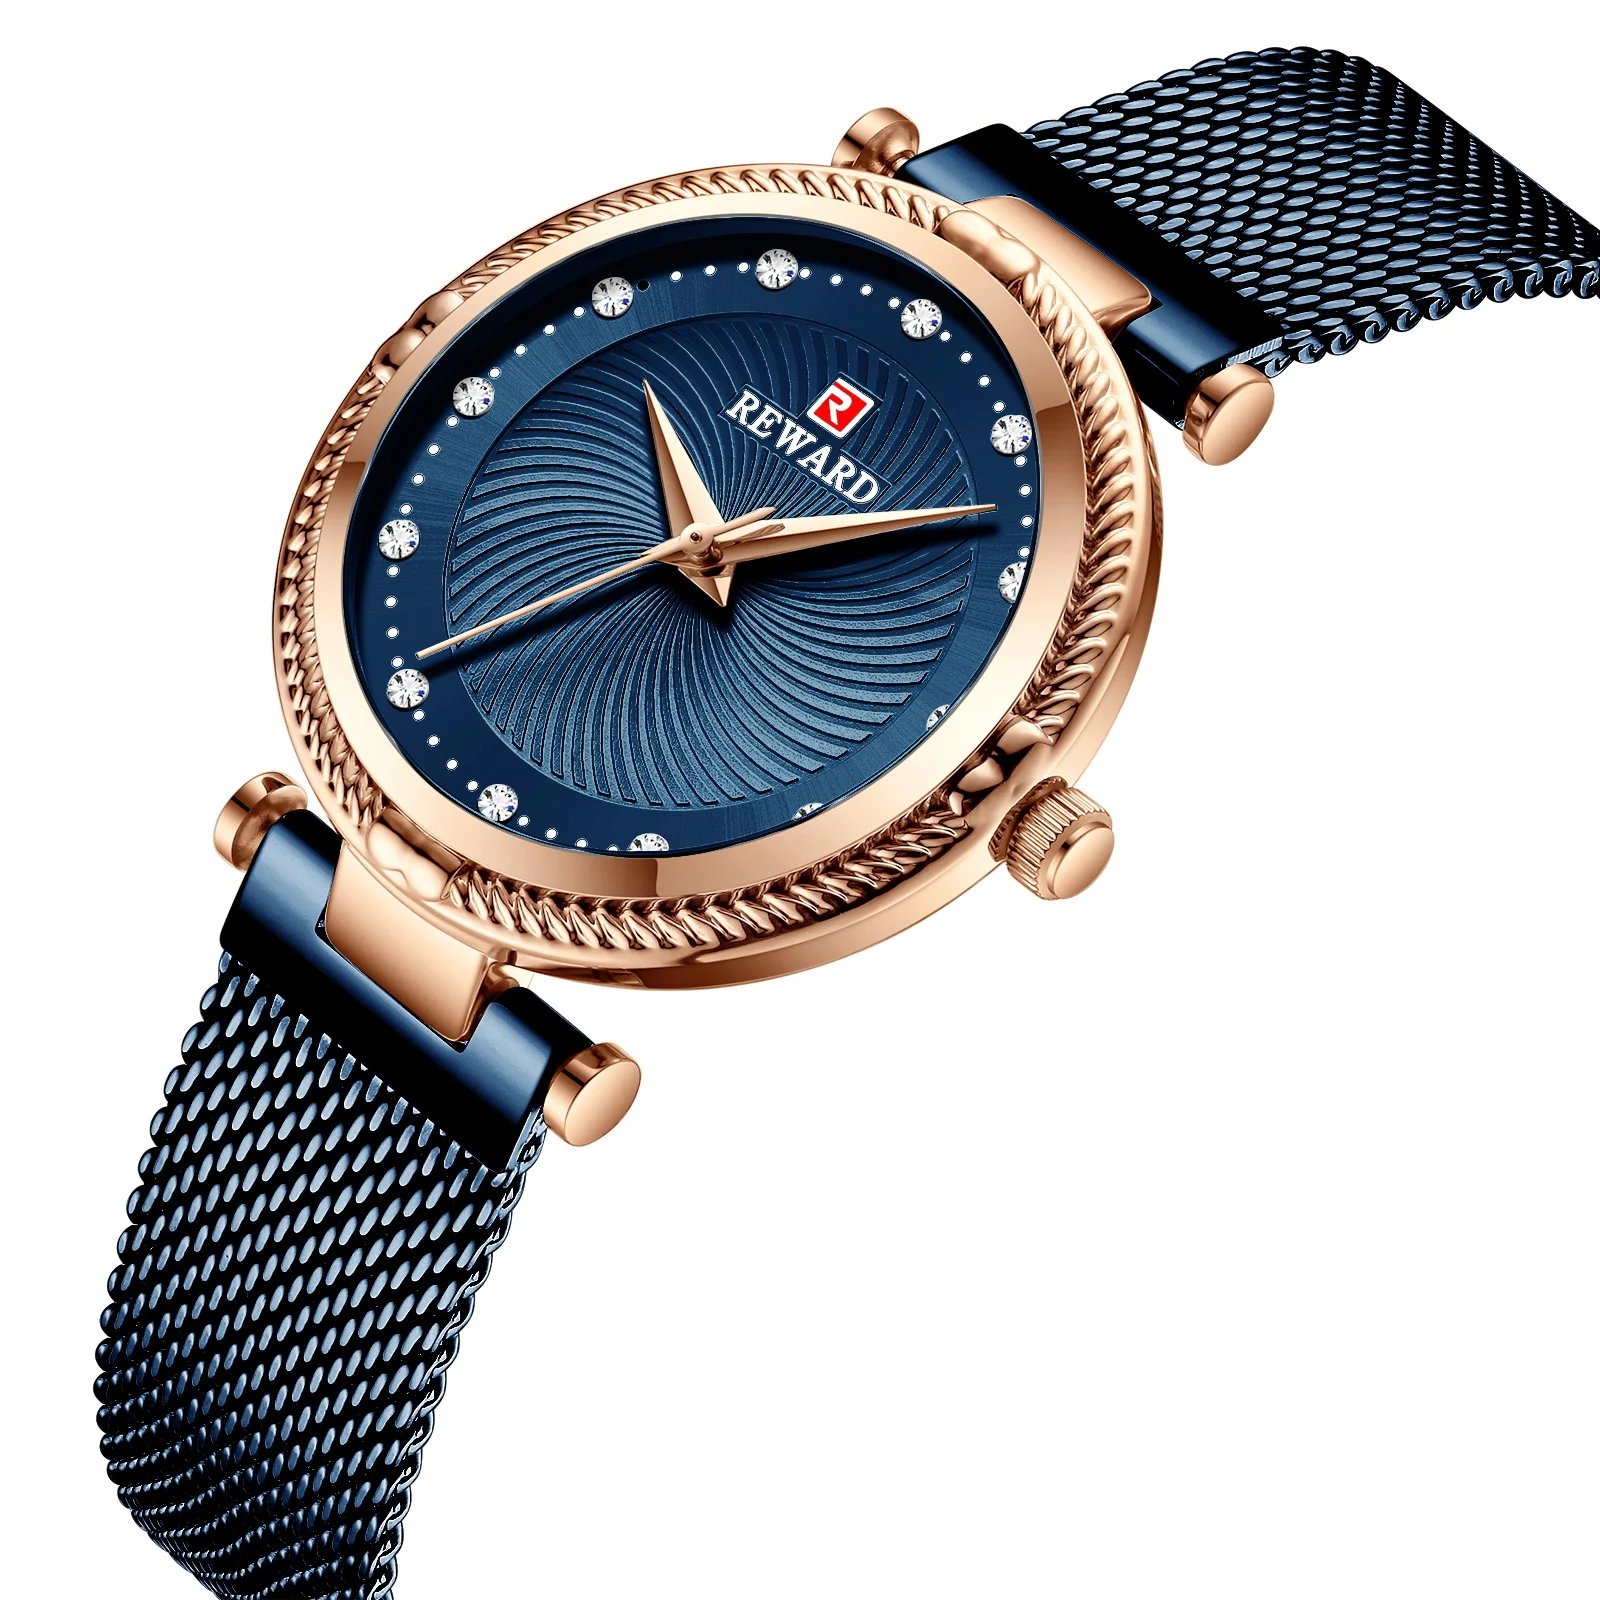 REWARD Women Watches Quartz Watch Casual Luxury Design Soft Steel Mesh band Wristwatches for lady Reloj de mujer RD22007L